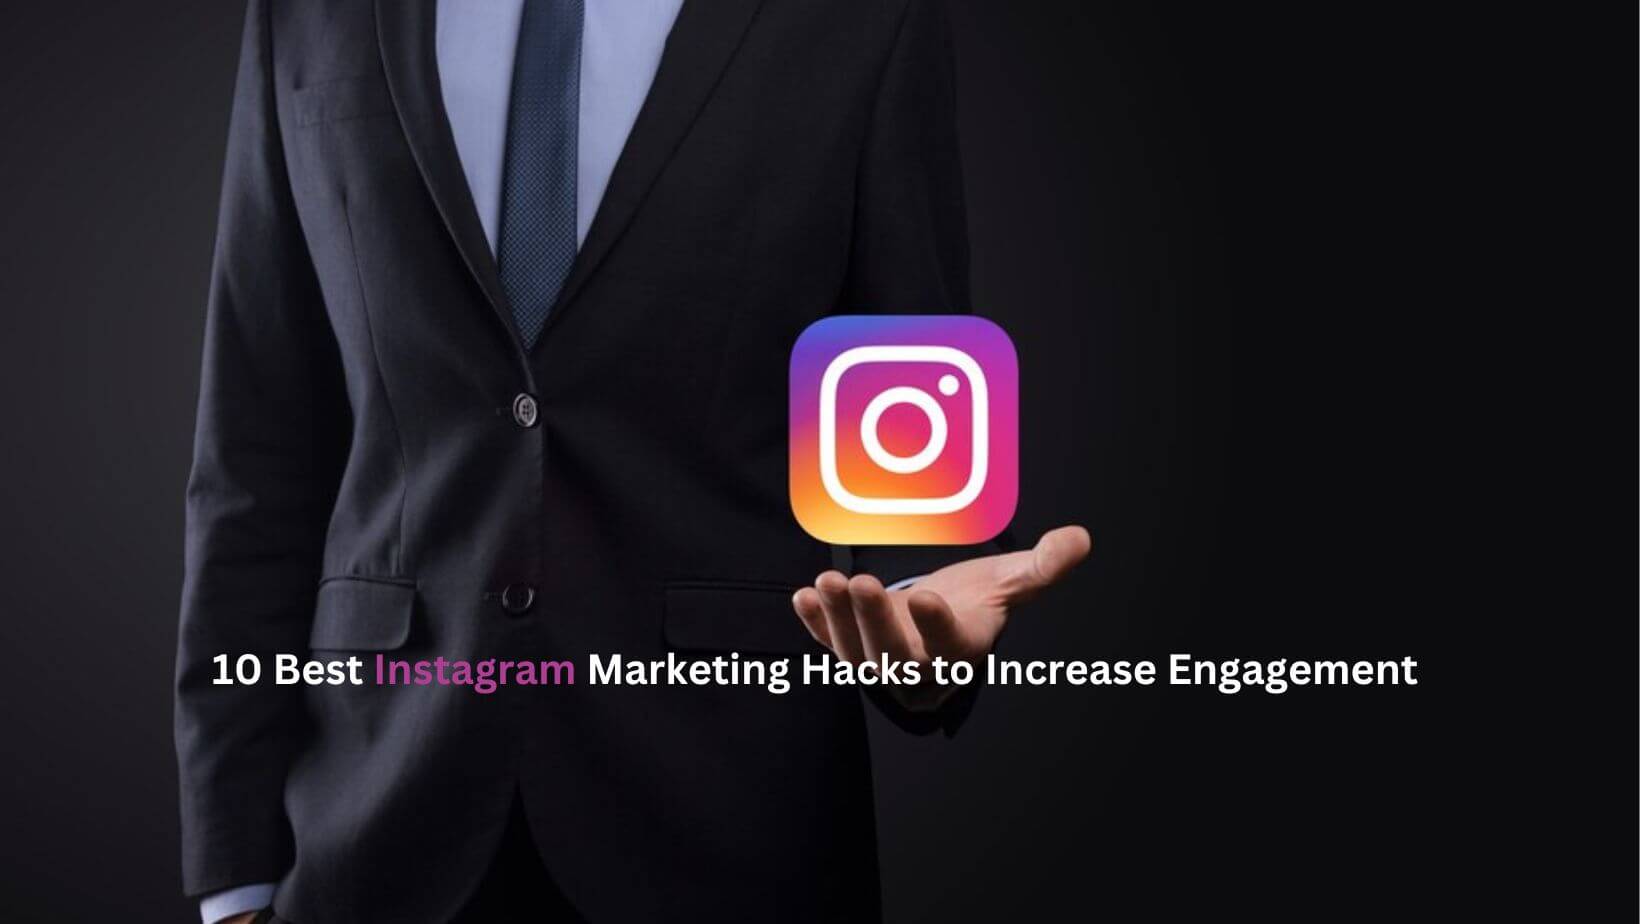 10 Best Instagram Marketing Hacks to Increase Engagement, Digital Marketing Course in Calicut